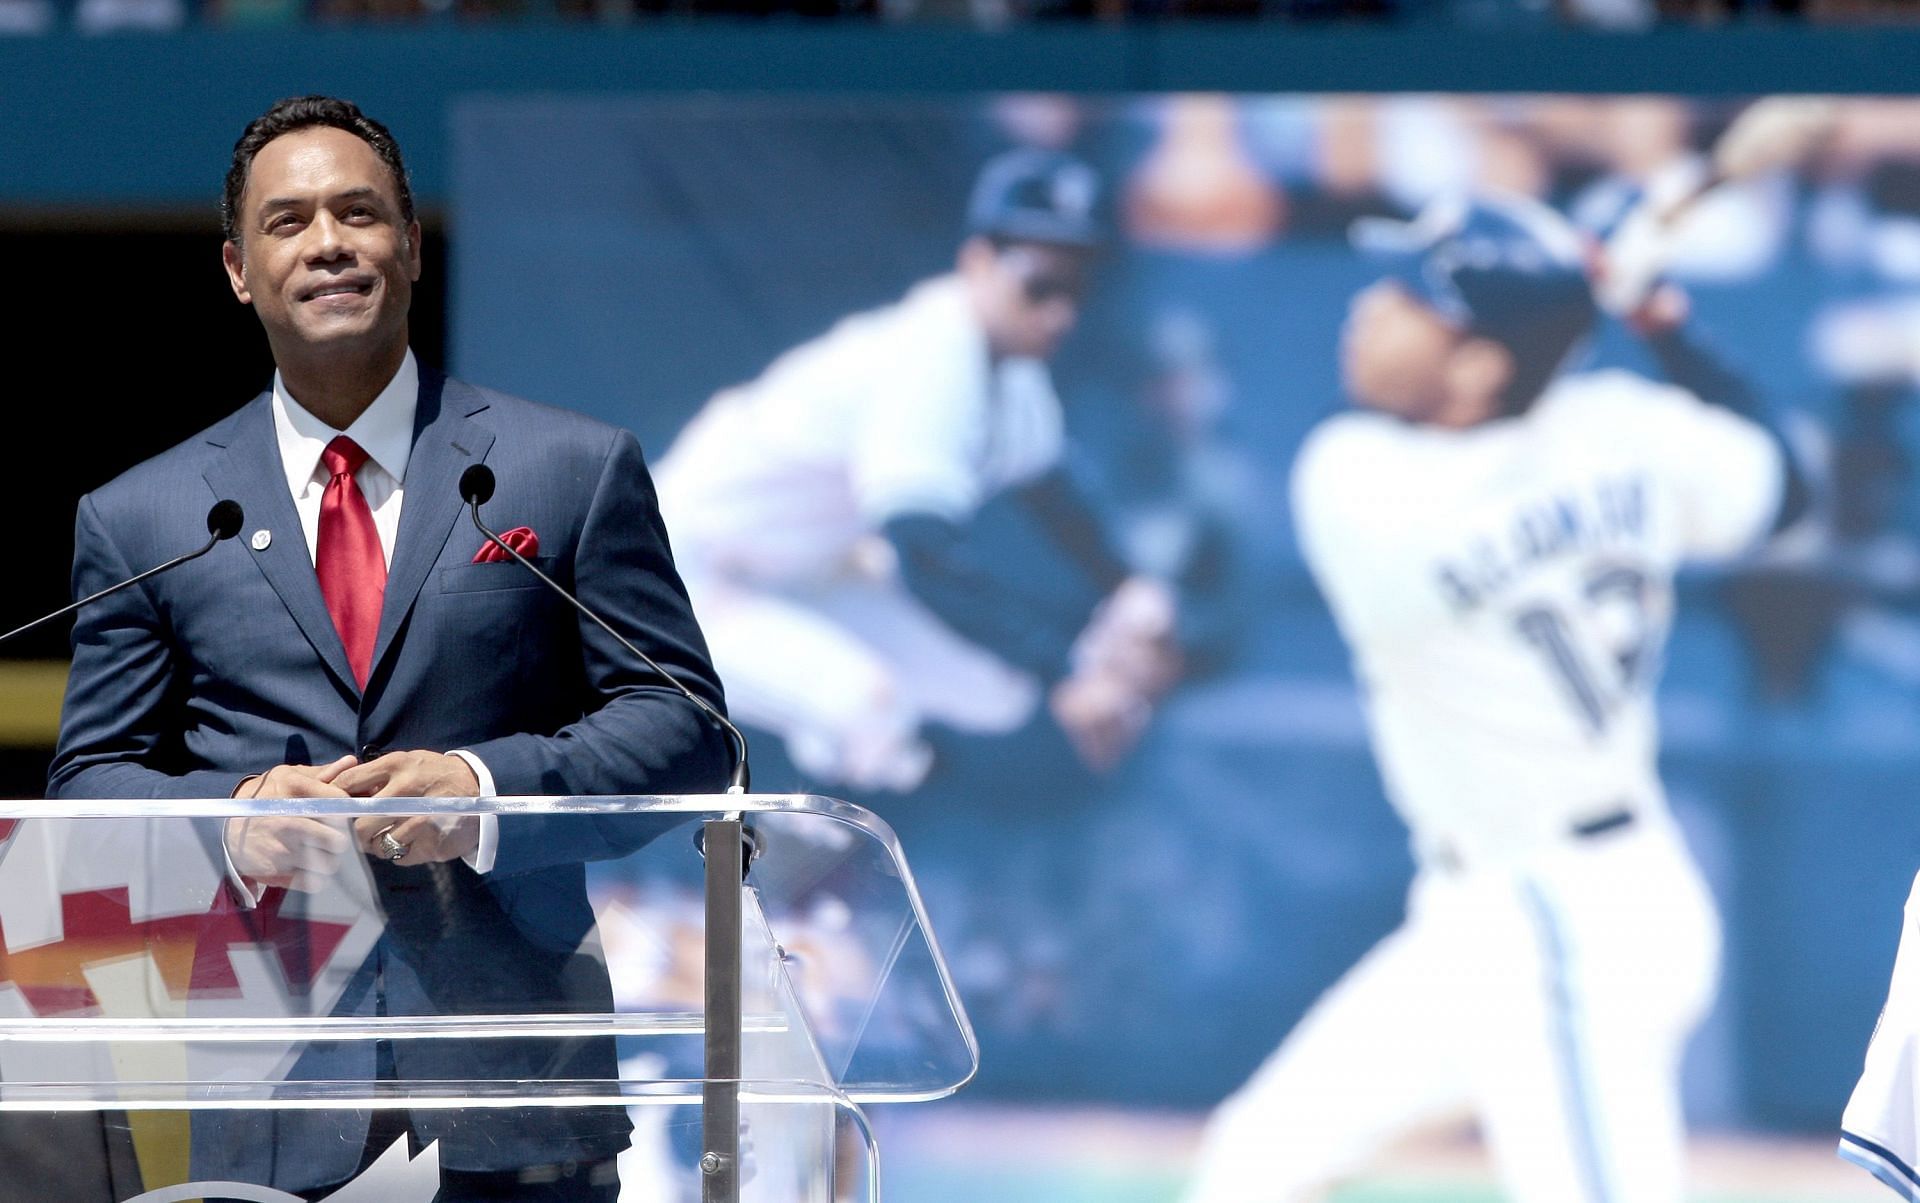 MLB And Toronto Blue Jays Ban Roberto Alomar After Sexual Misconduct  Investigation